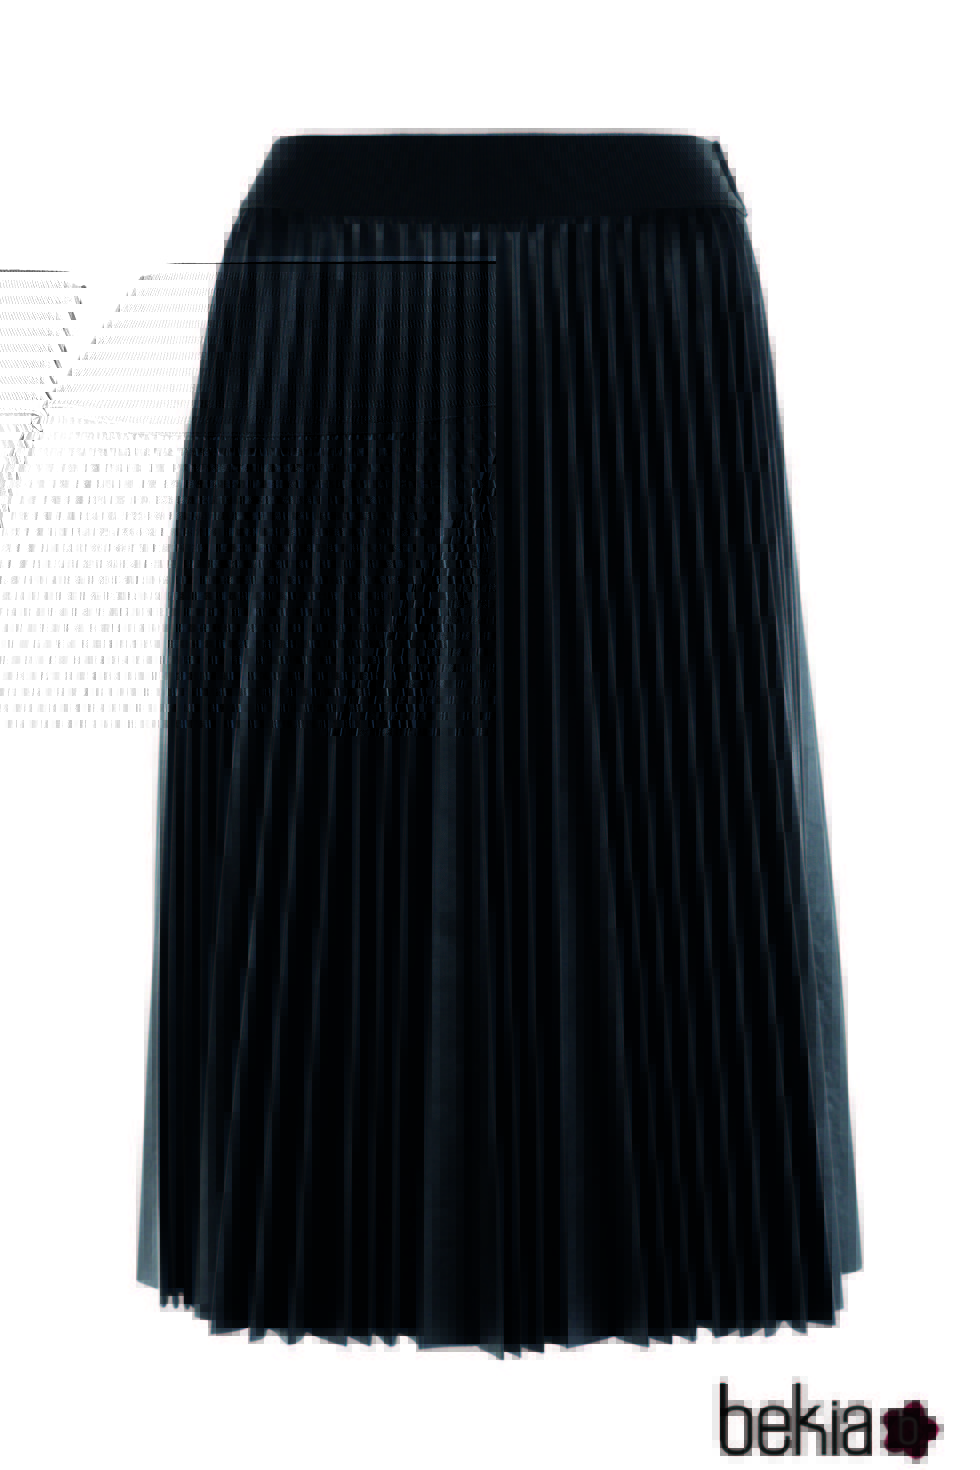 Falda negra tableada de la firma Kocca